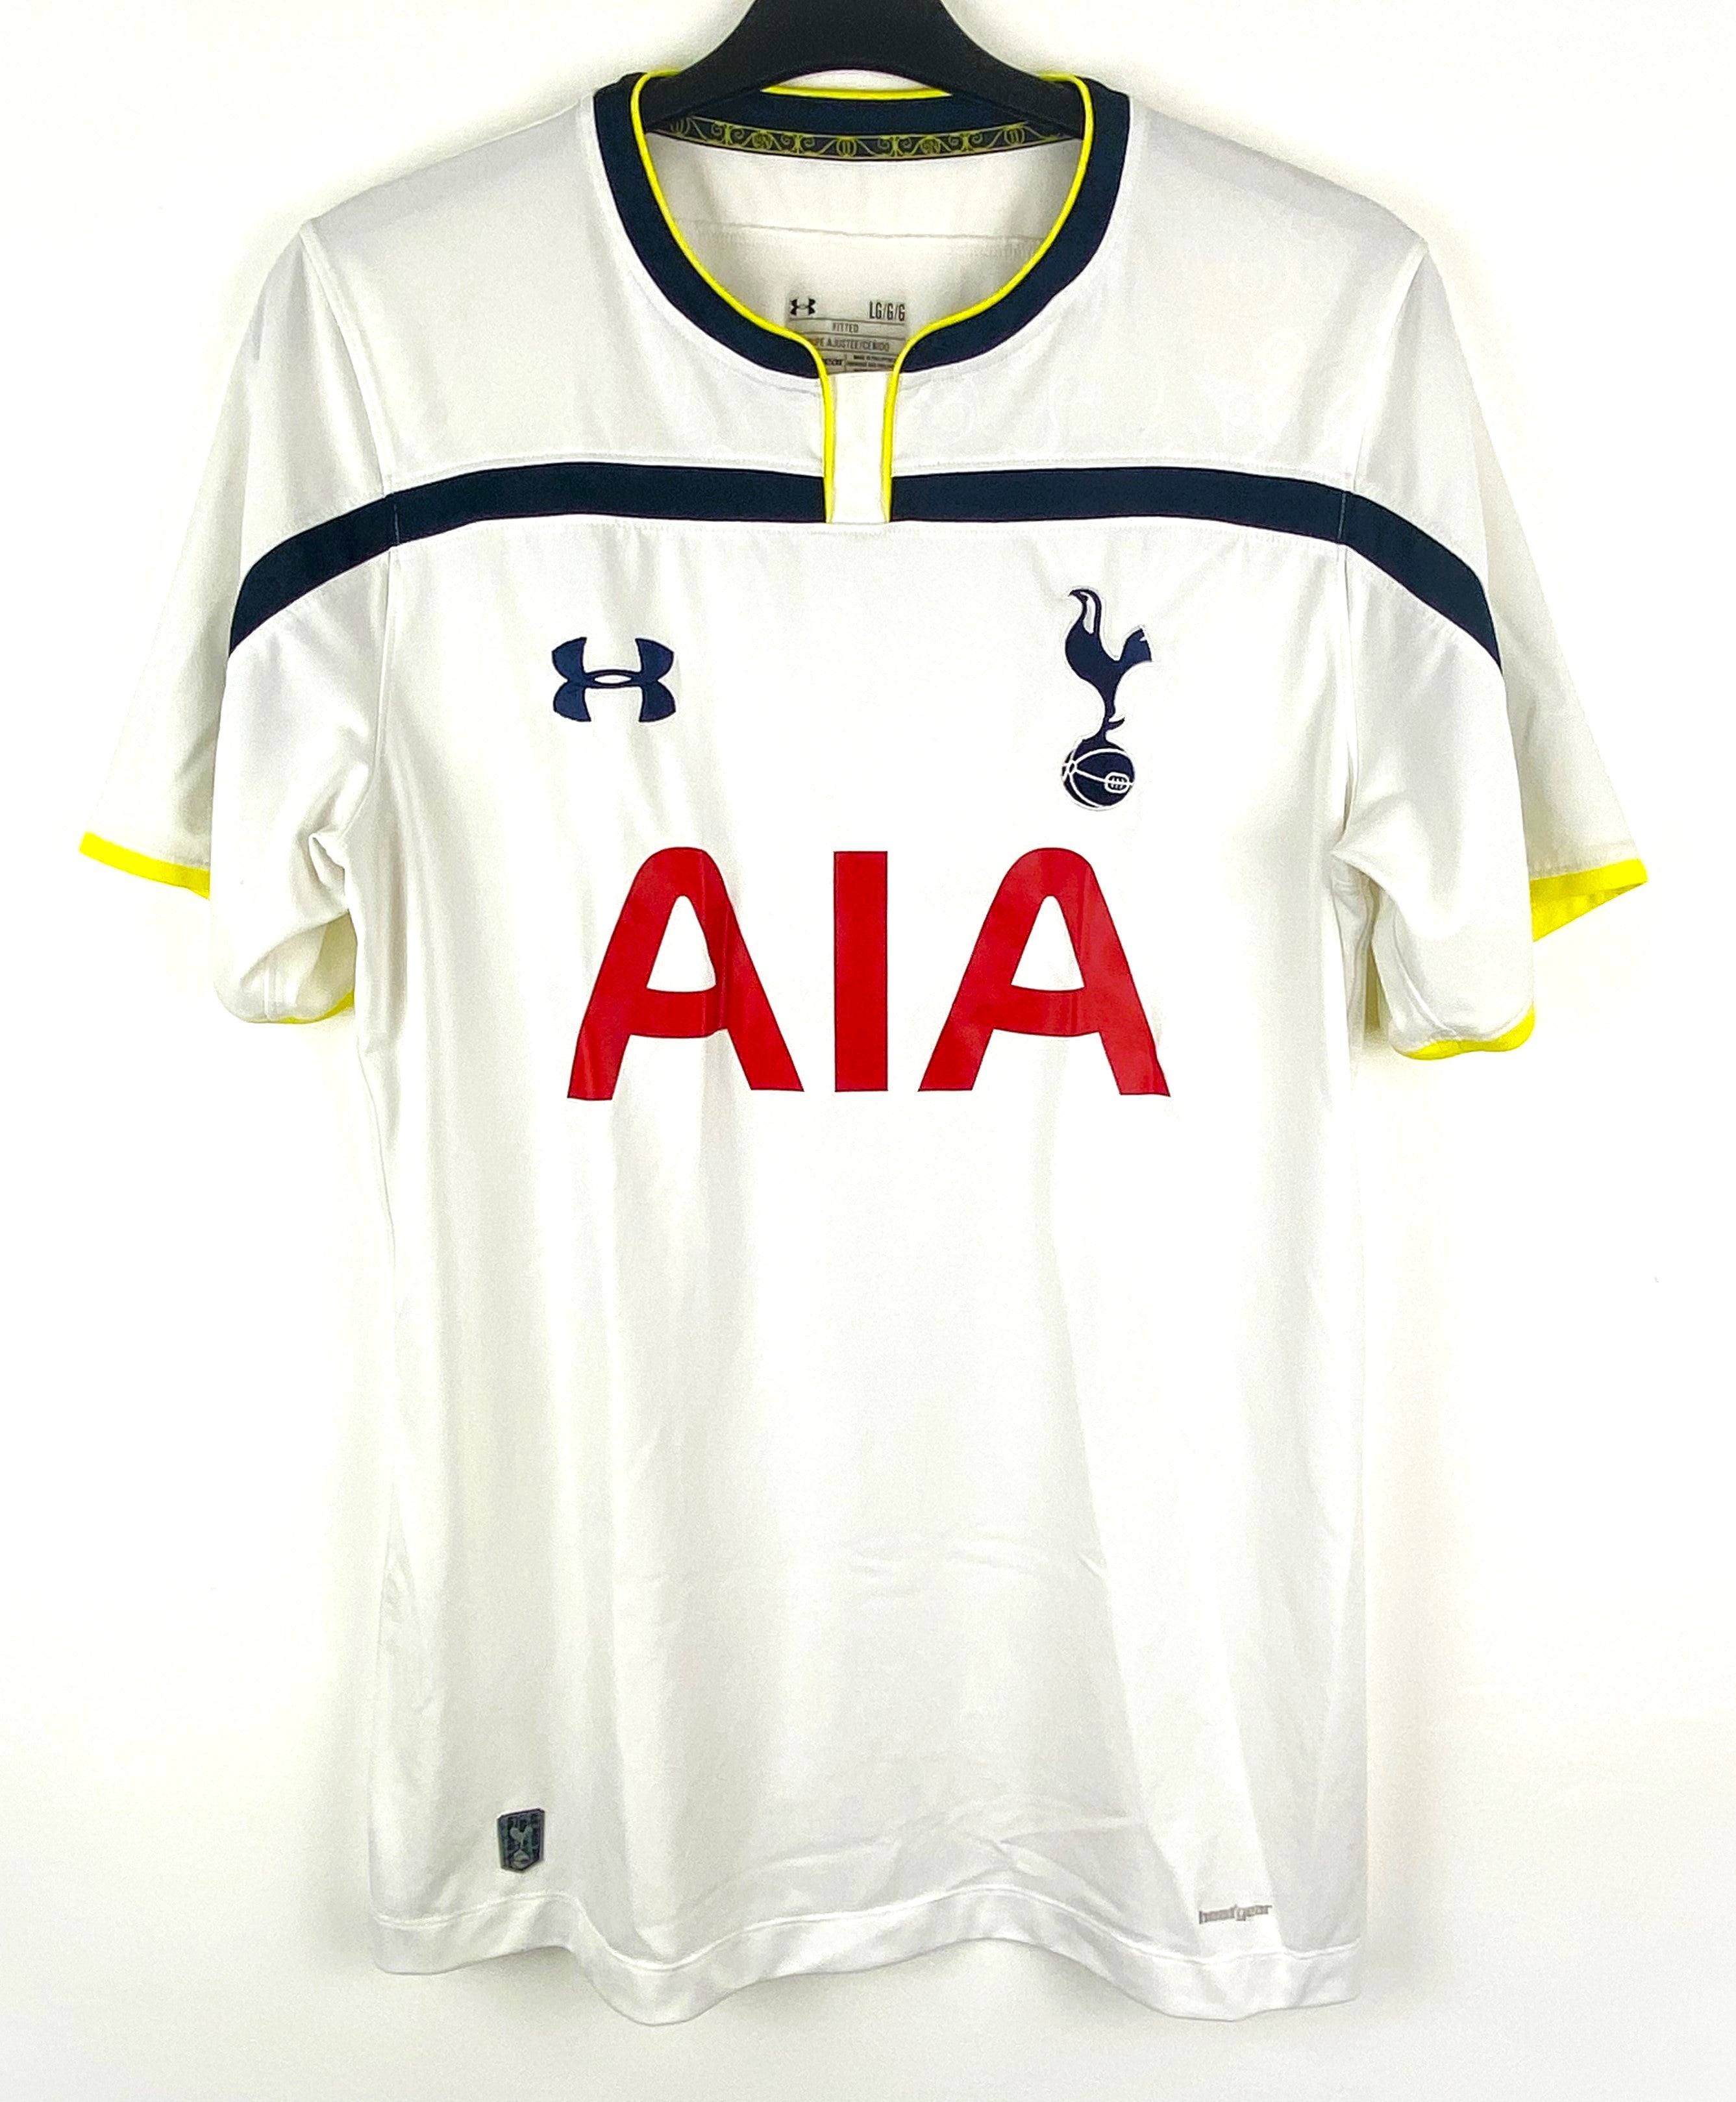 Tottenham Hotspur 15/16 Under Armour Home Football Shirt